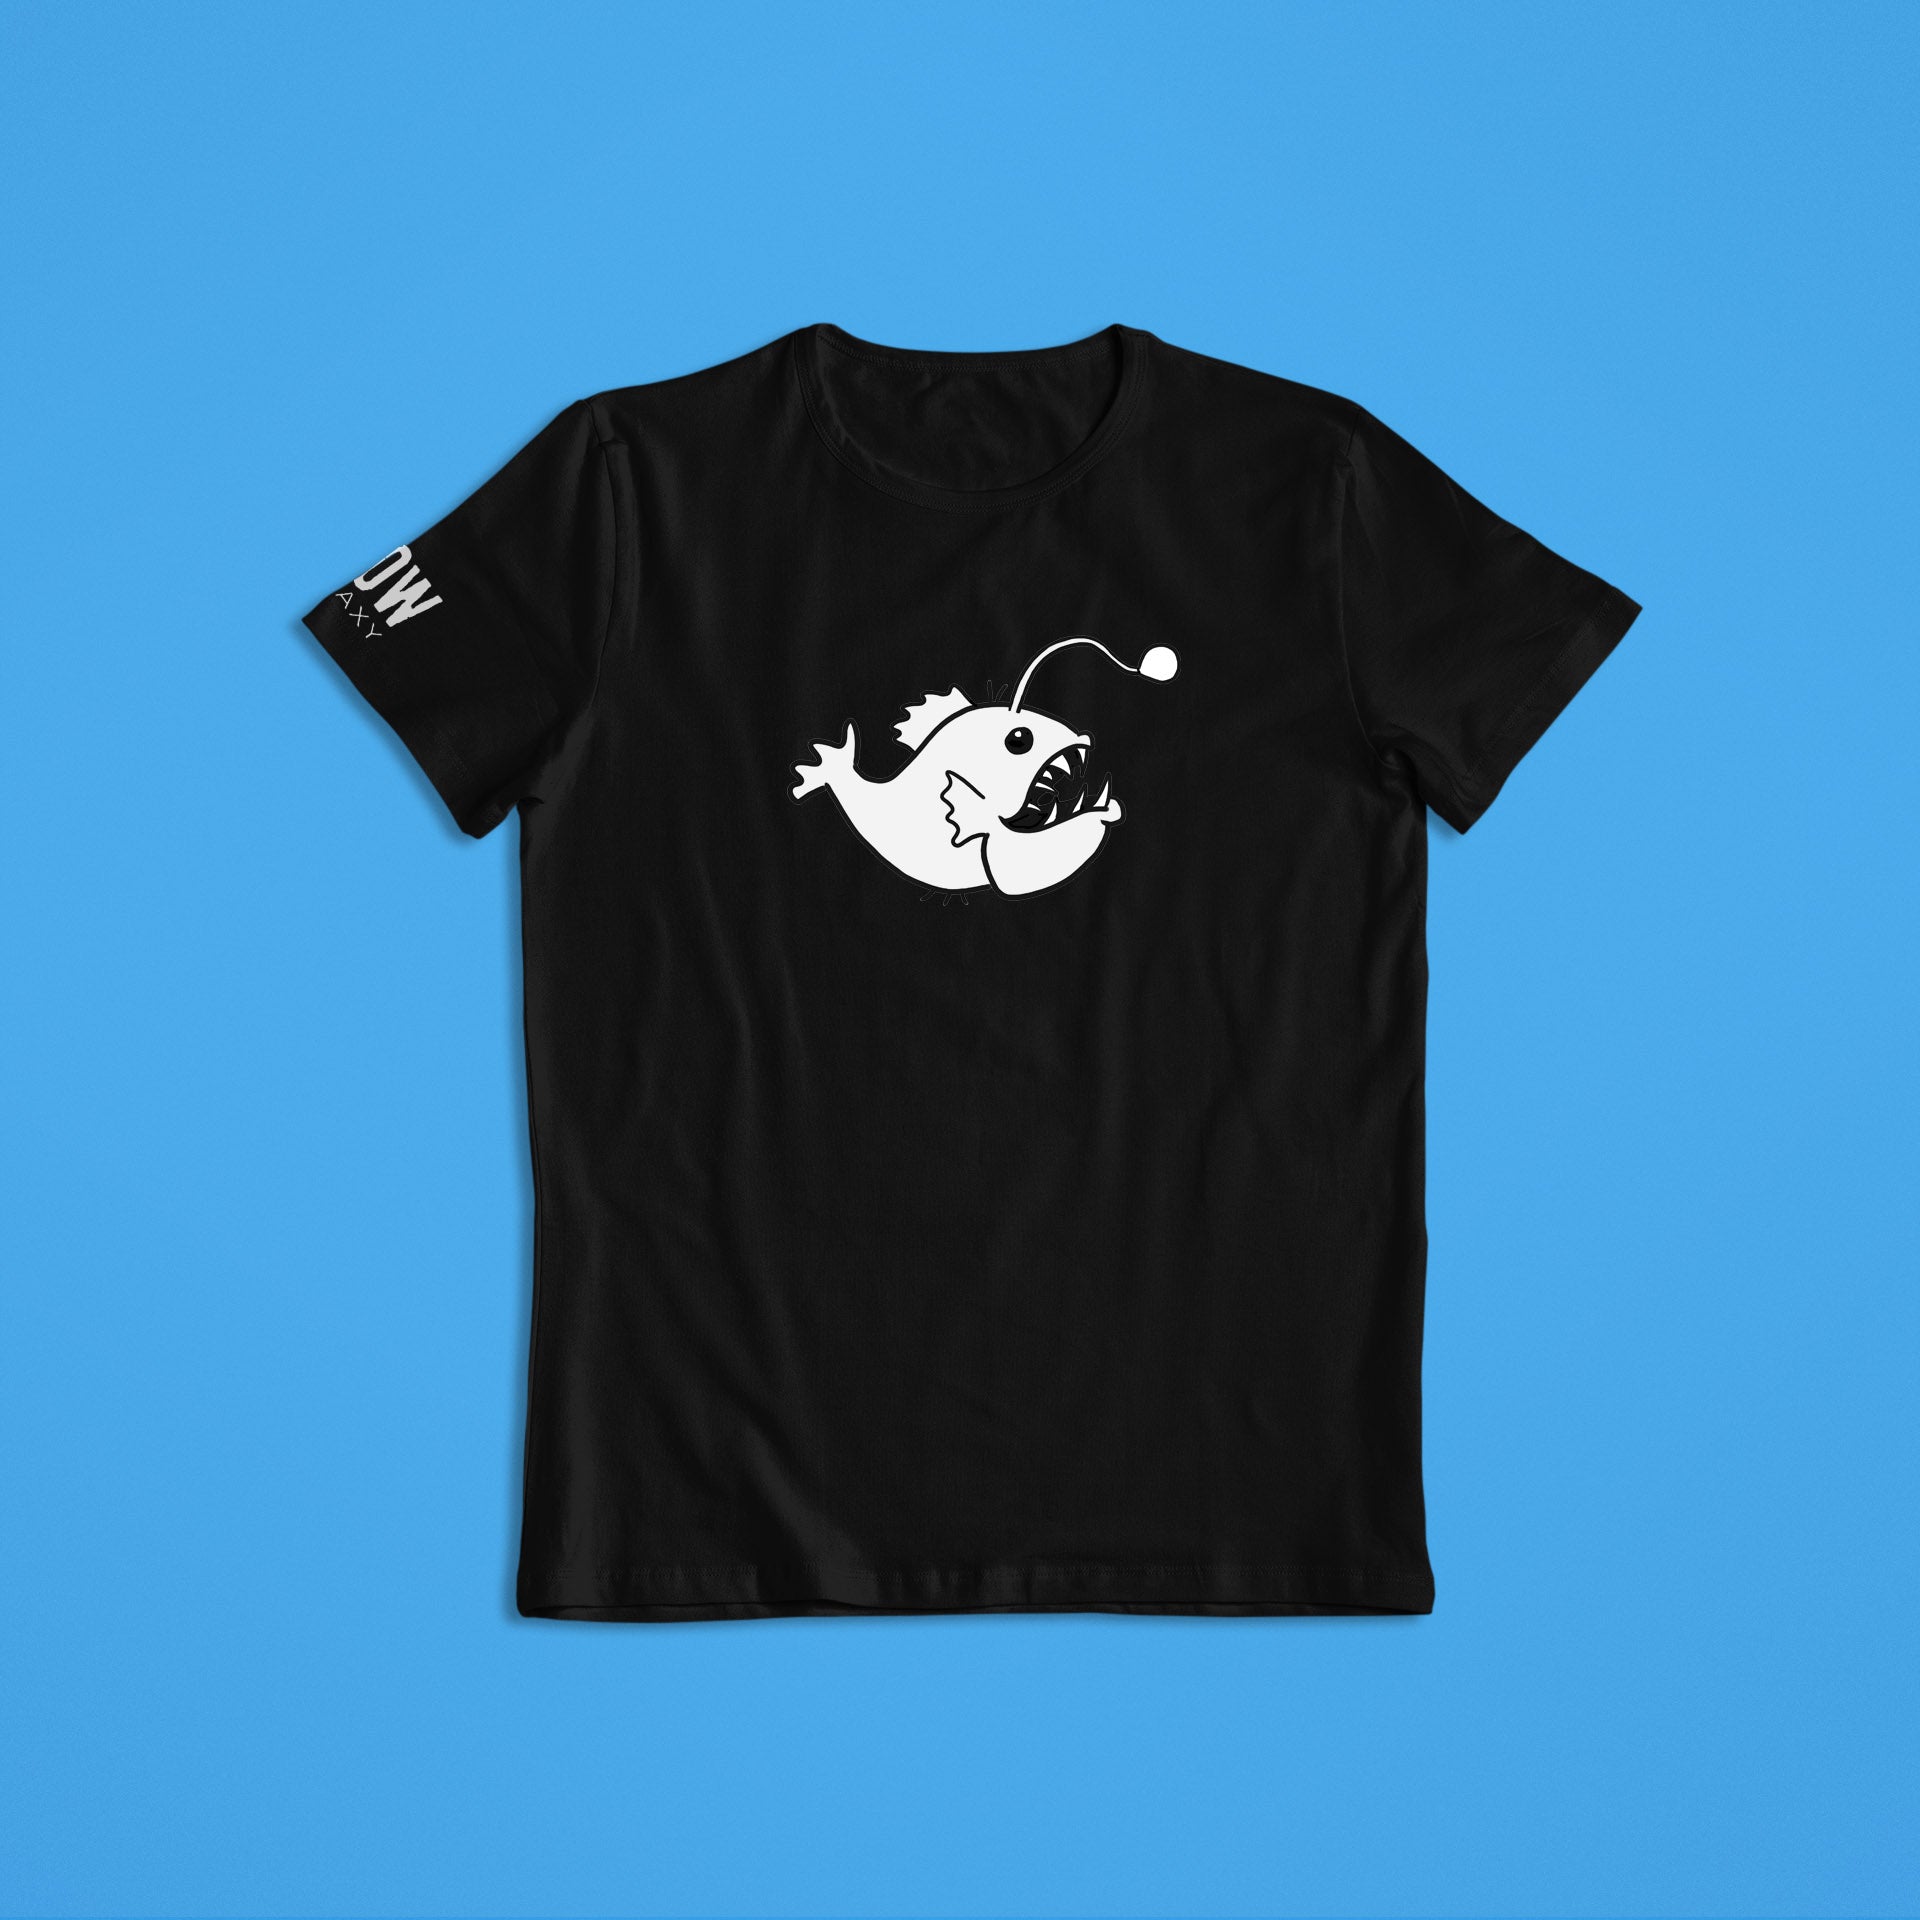 Angler fish t-shirt in black